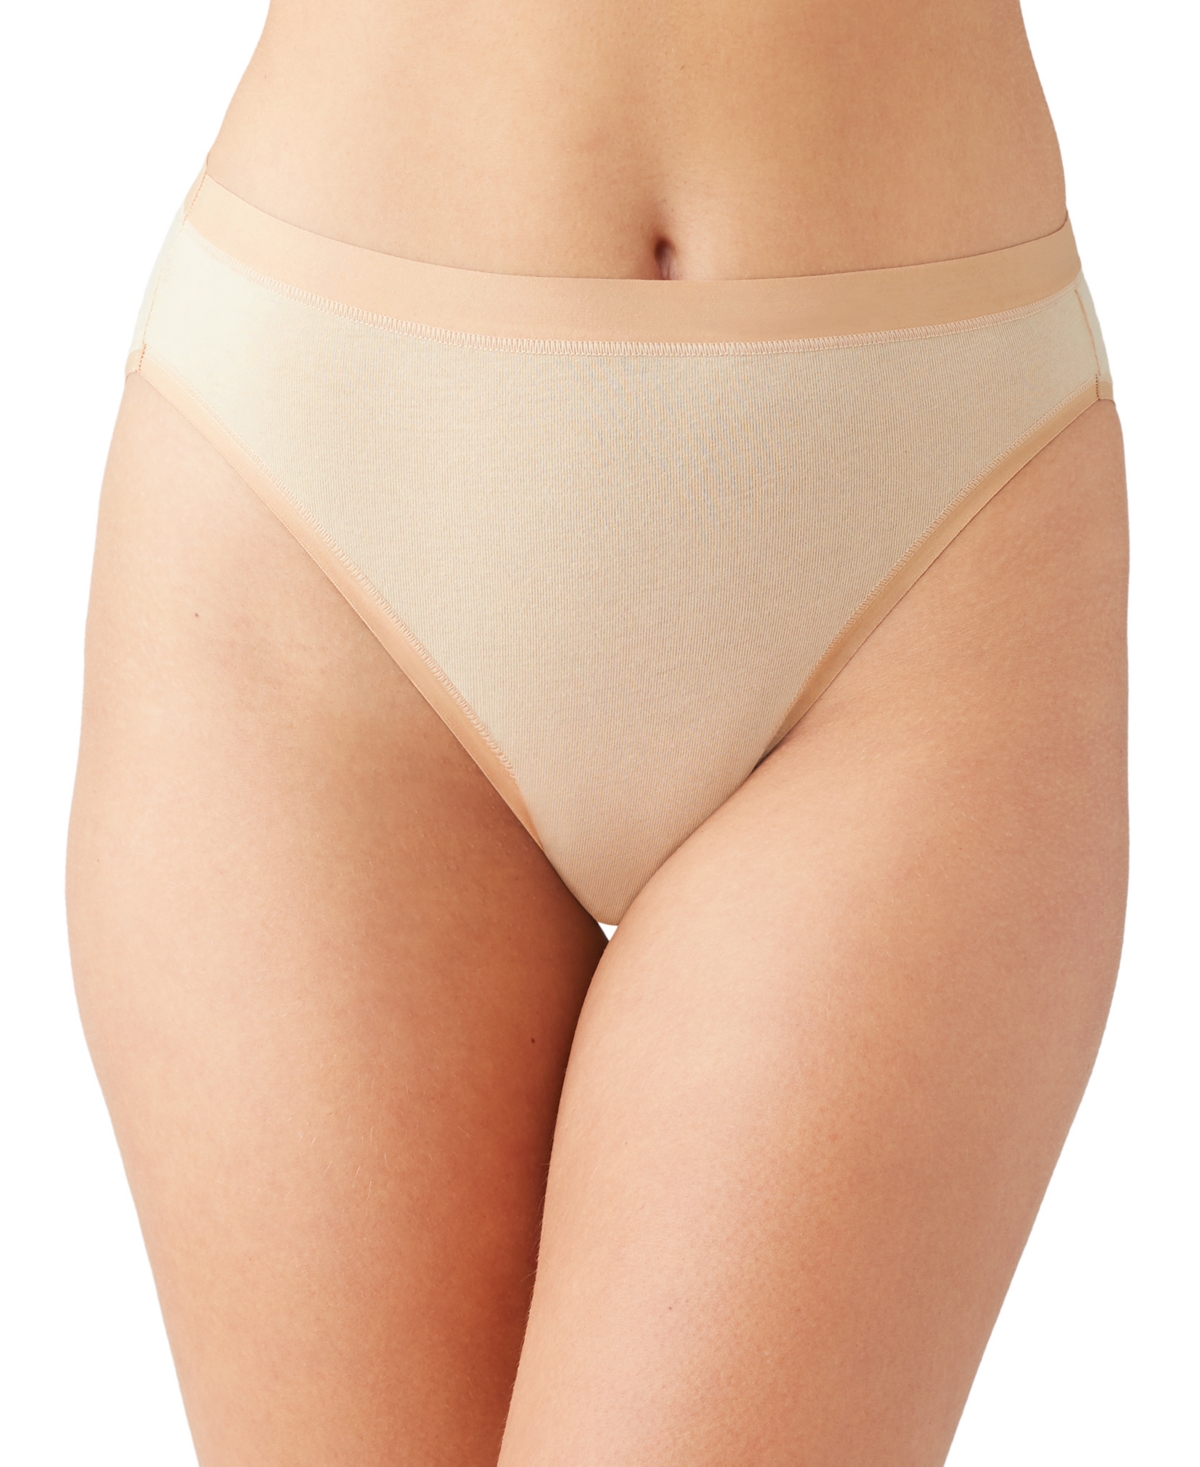 Shop Wacoal Women's Understated Cotton Hi-cut Underwear 879362 In Sand